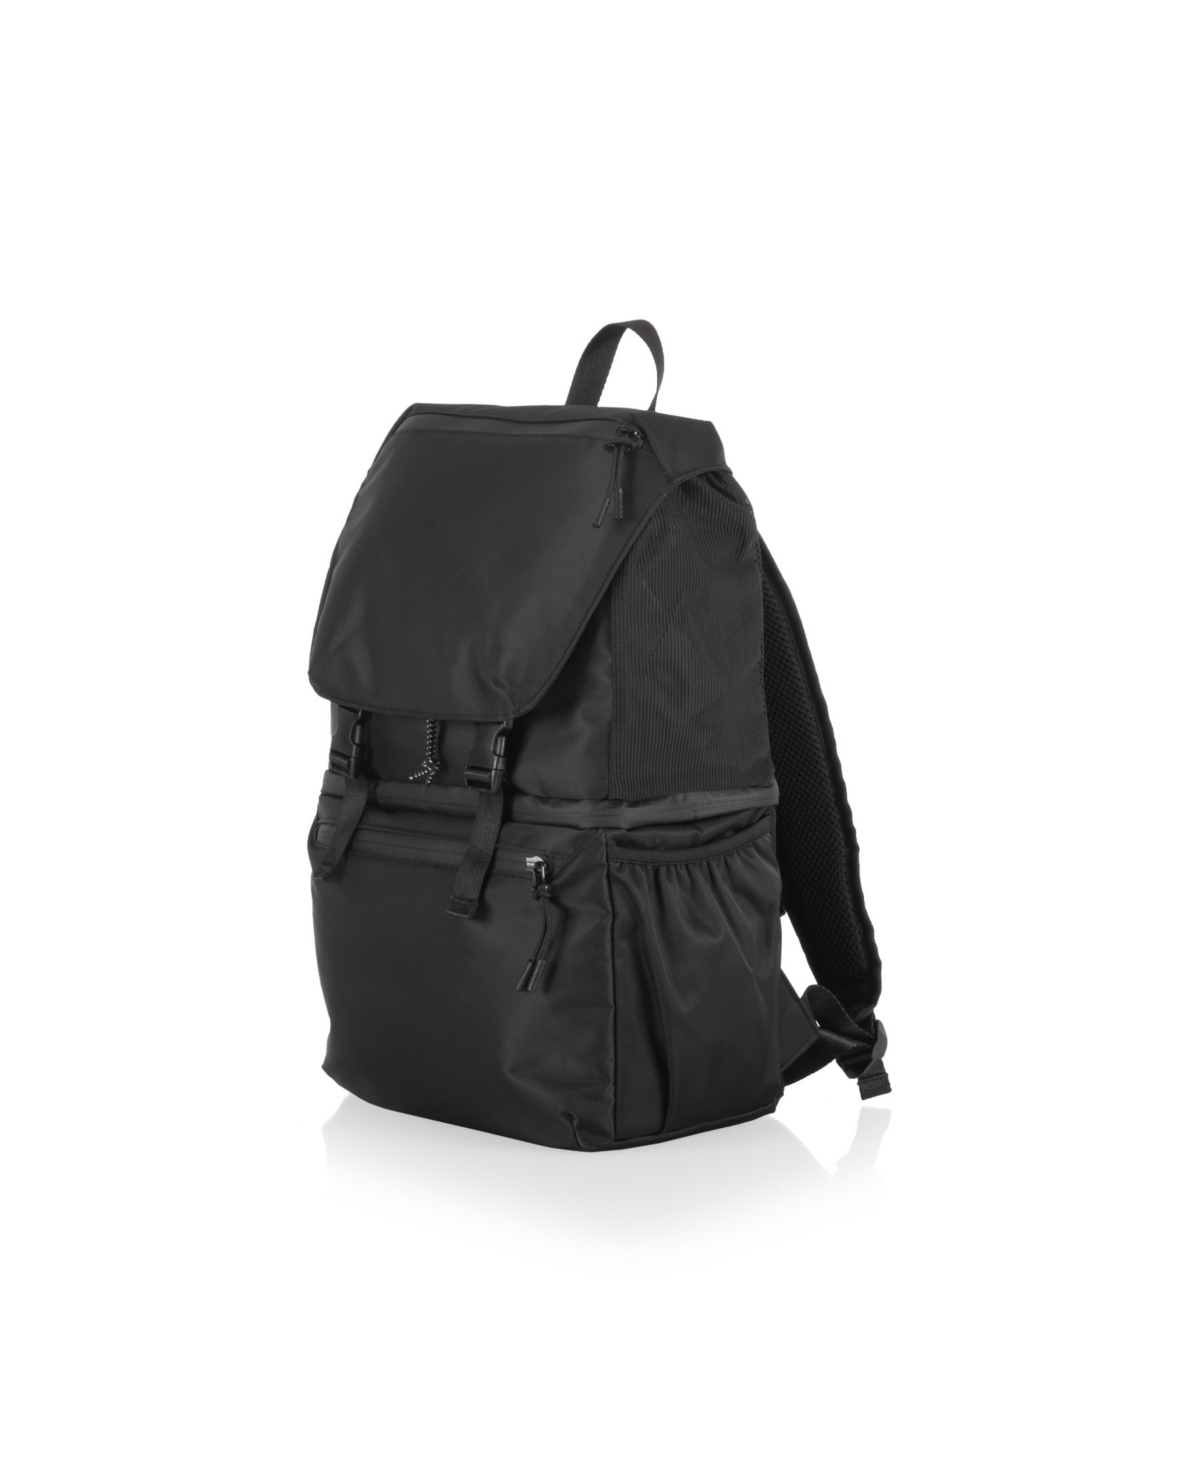 Oniva Tarana Cooler Backpack In Carbon Black